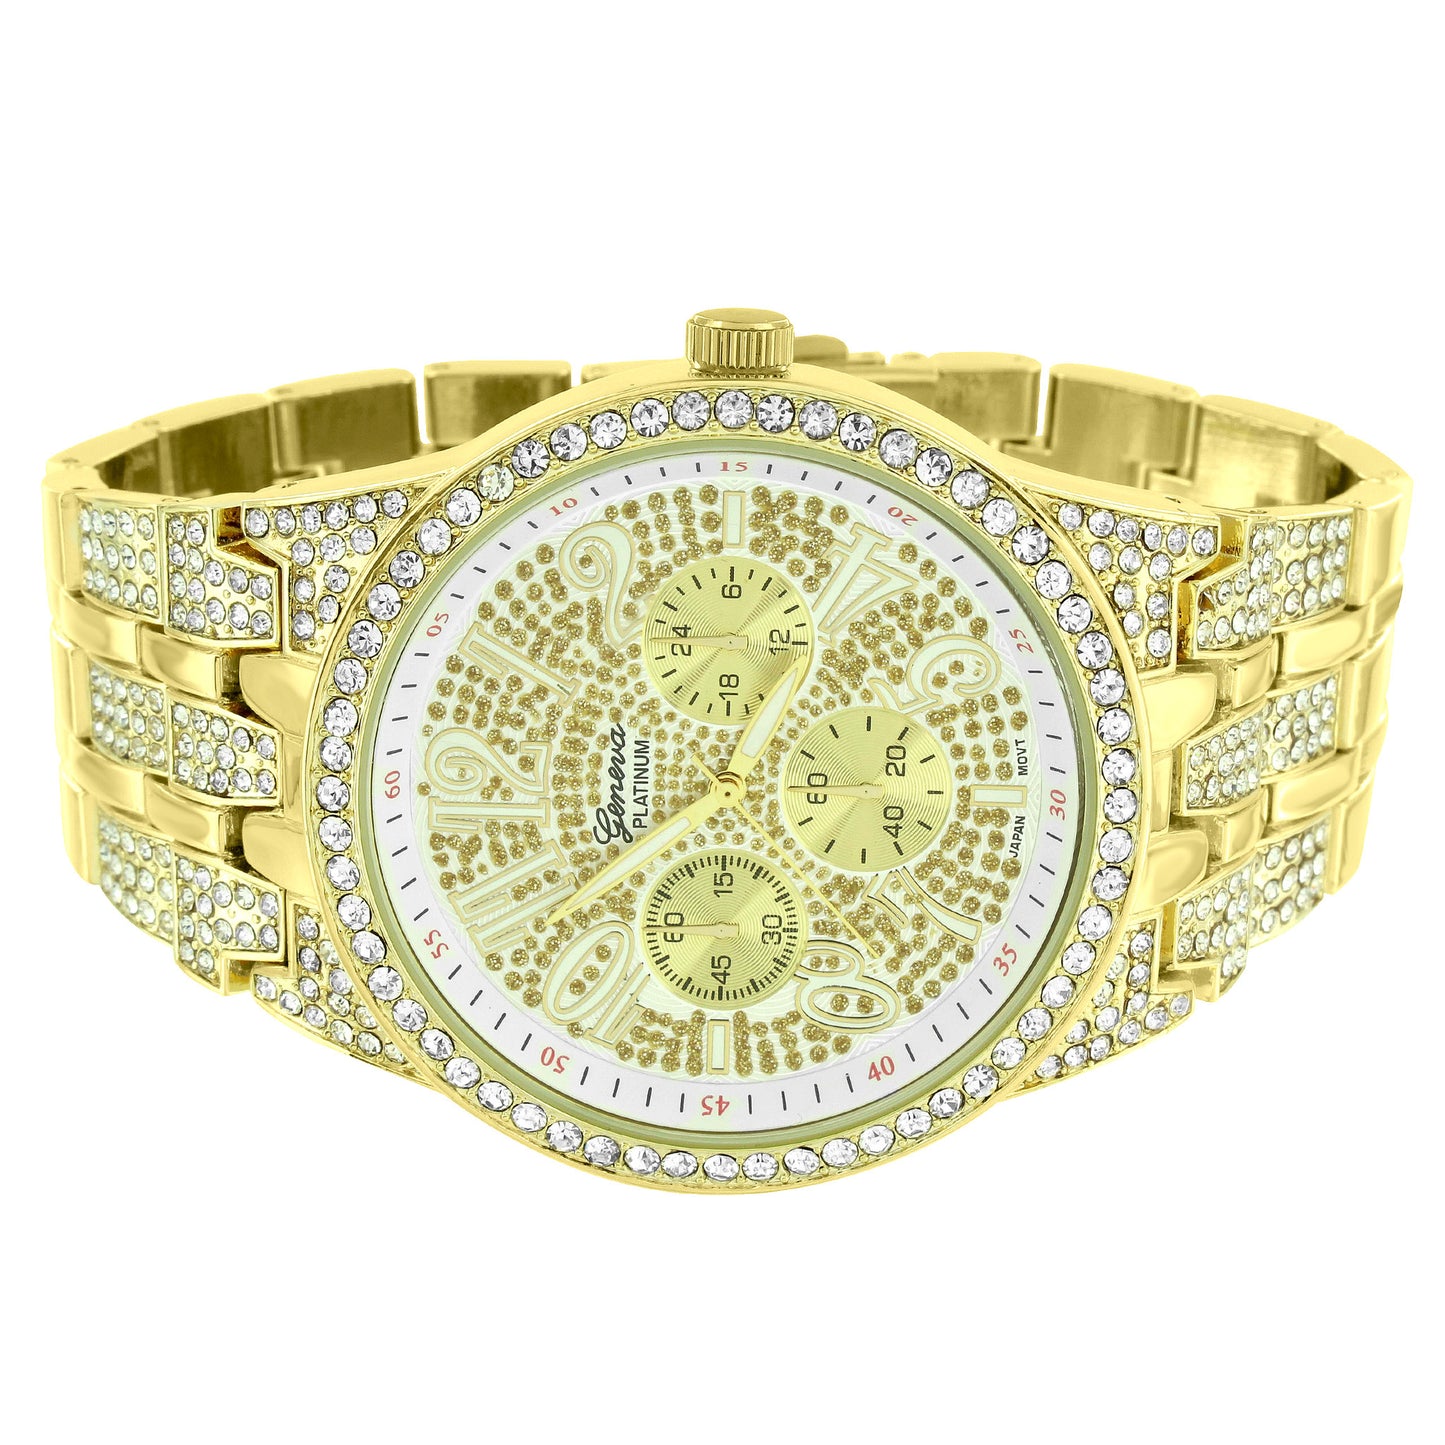 Watch Matching Bracelet Gift Set Full Bling Gold Tone Platinum Mens